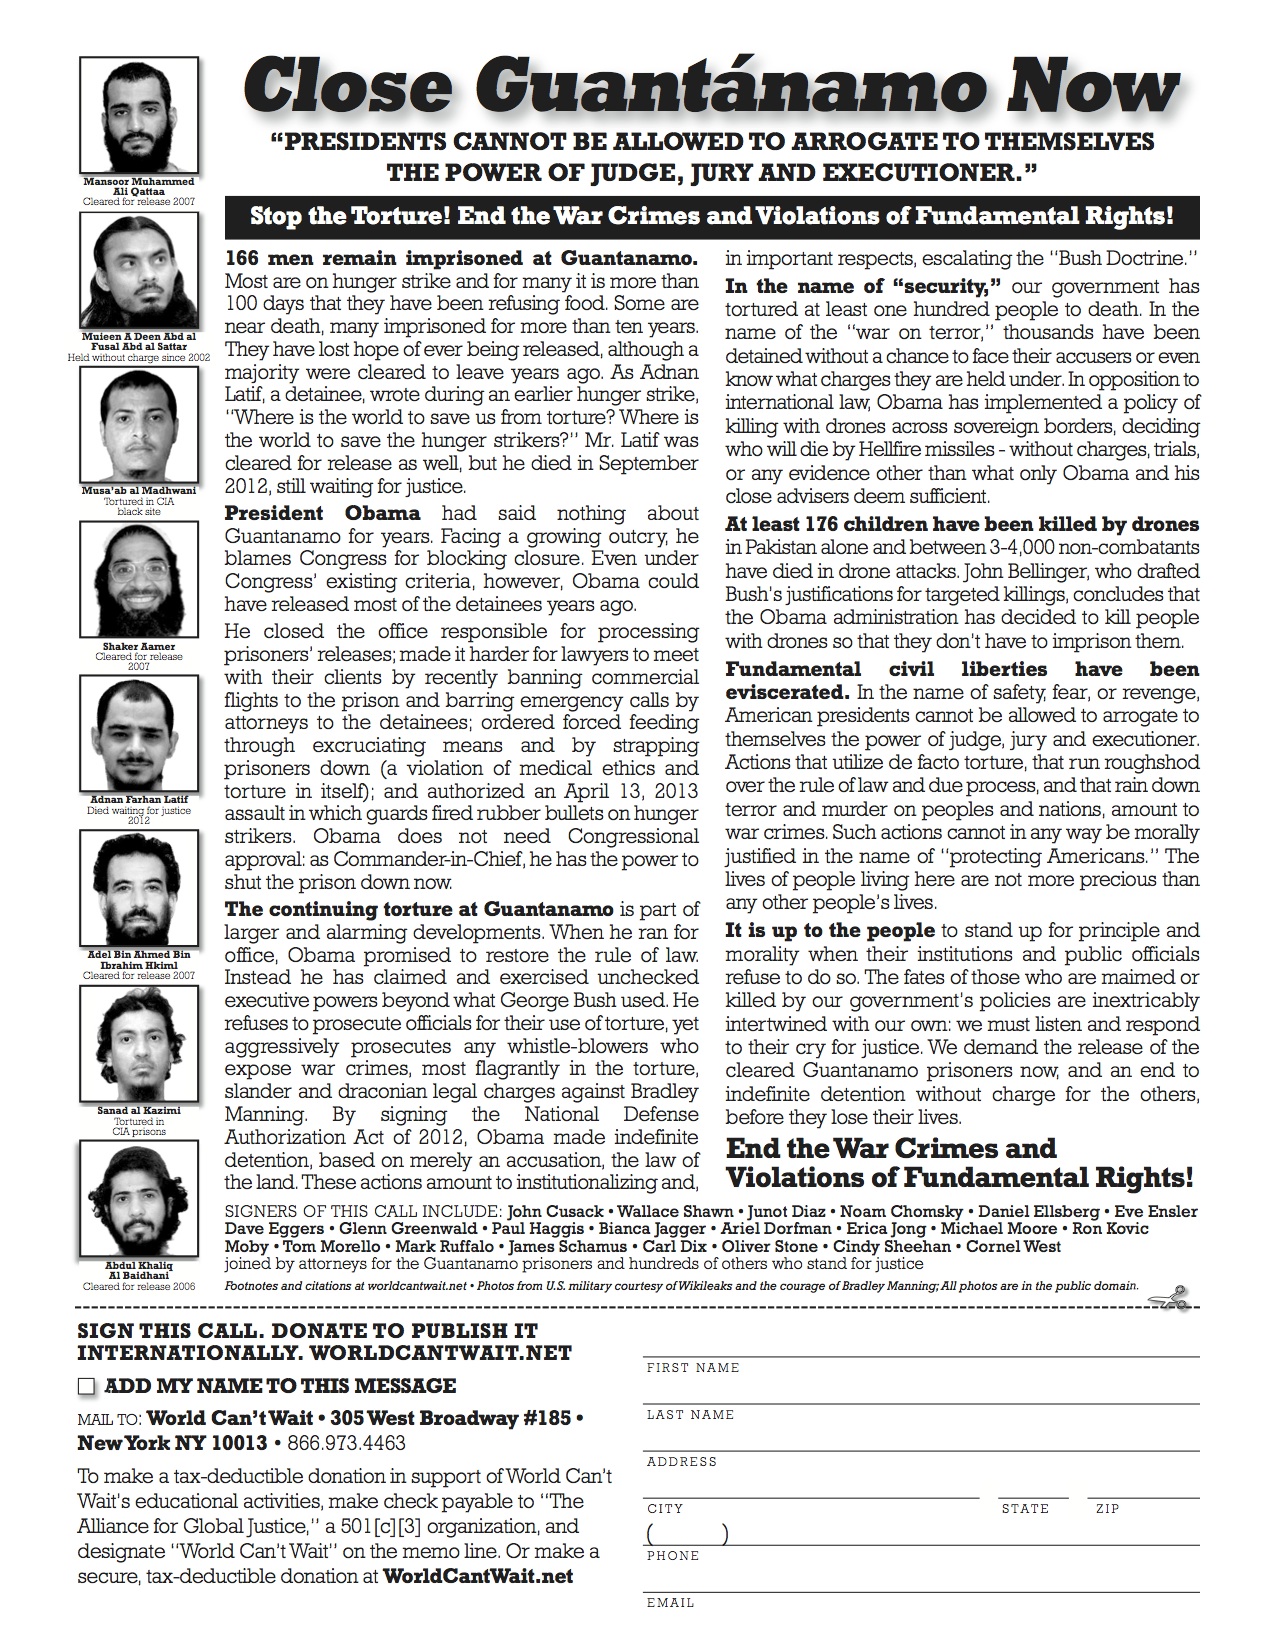  Guantanamo New York Times Ad